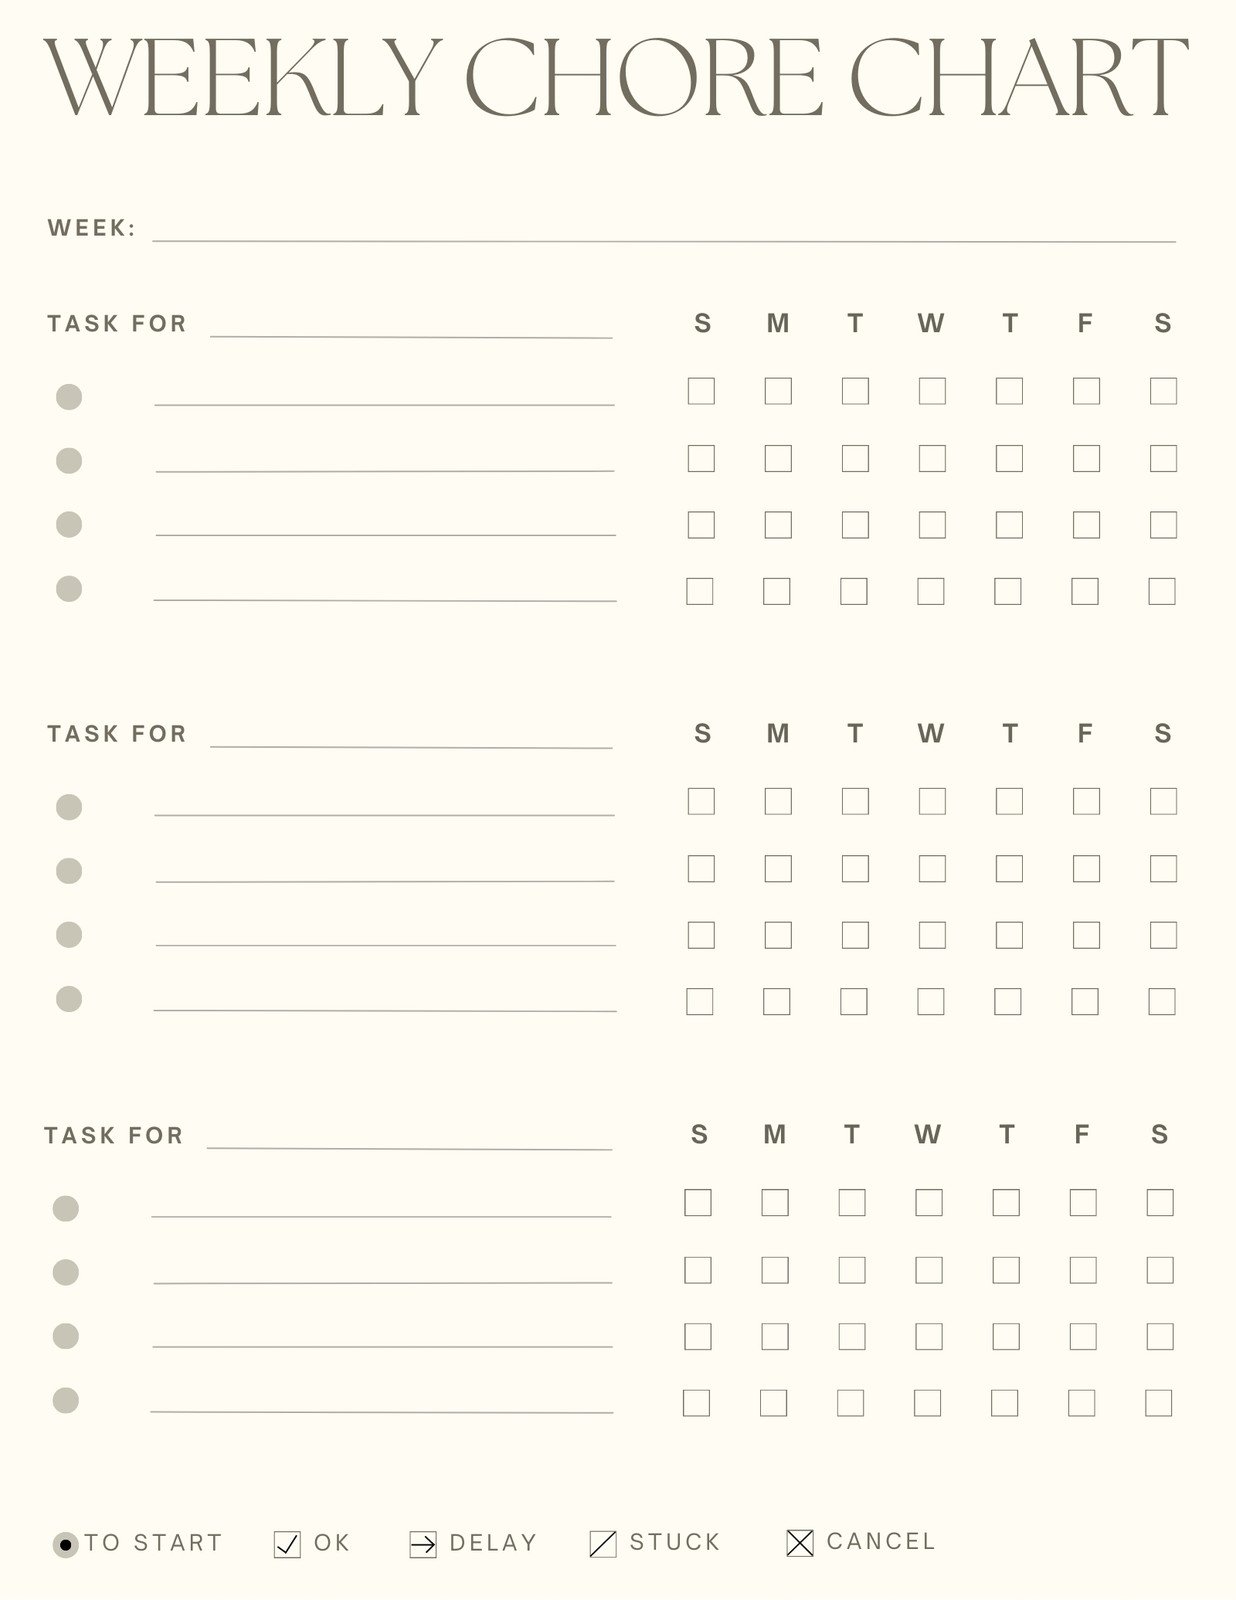 FREE chore chart template